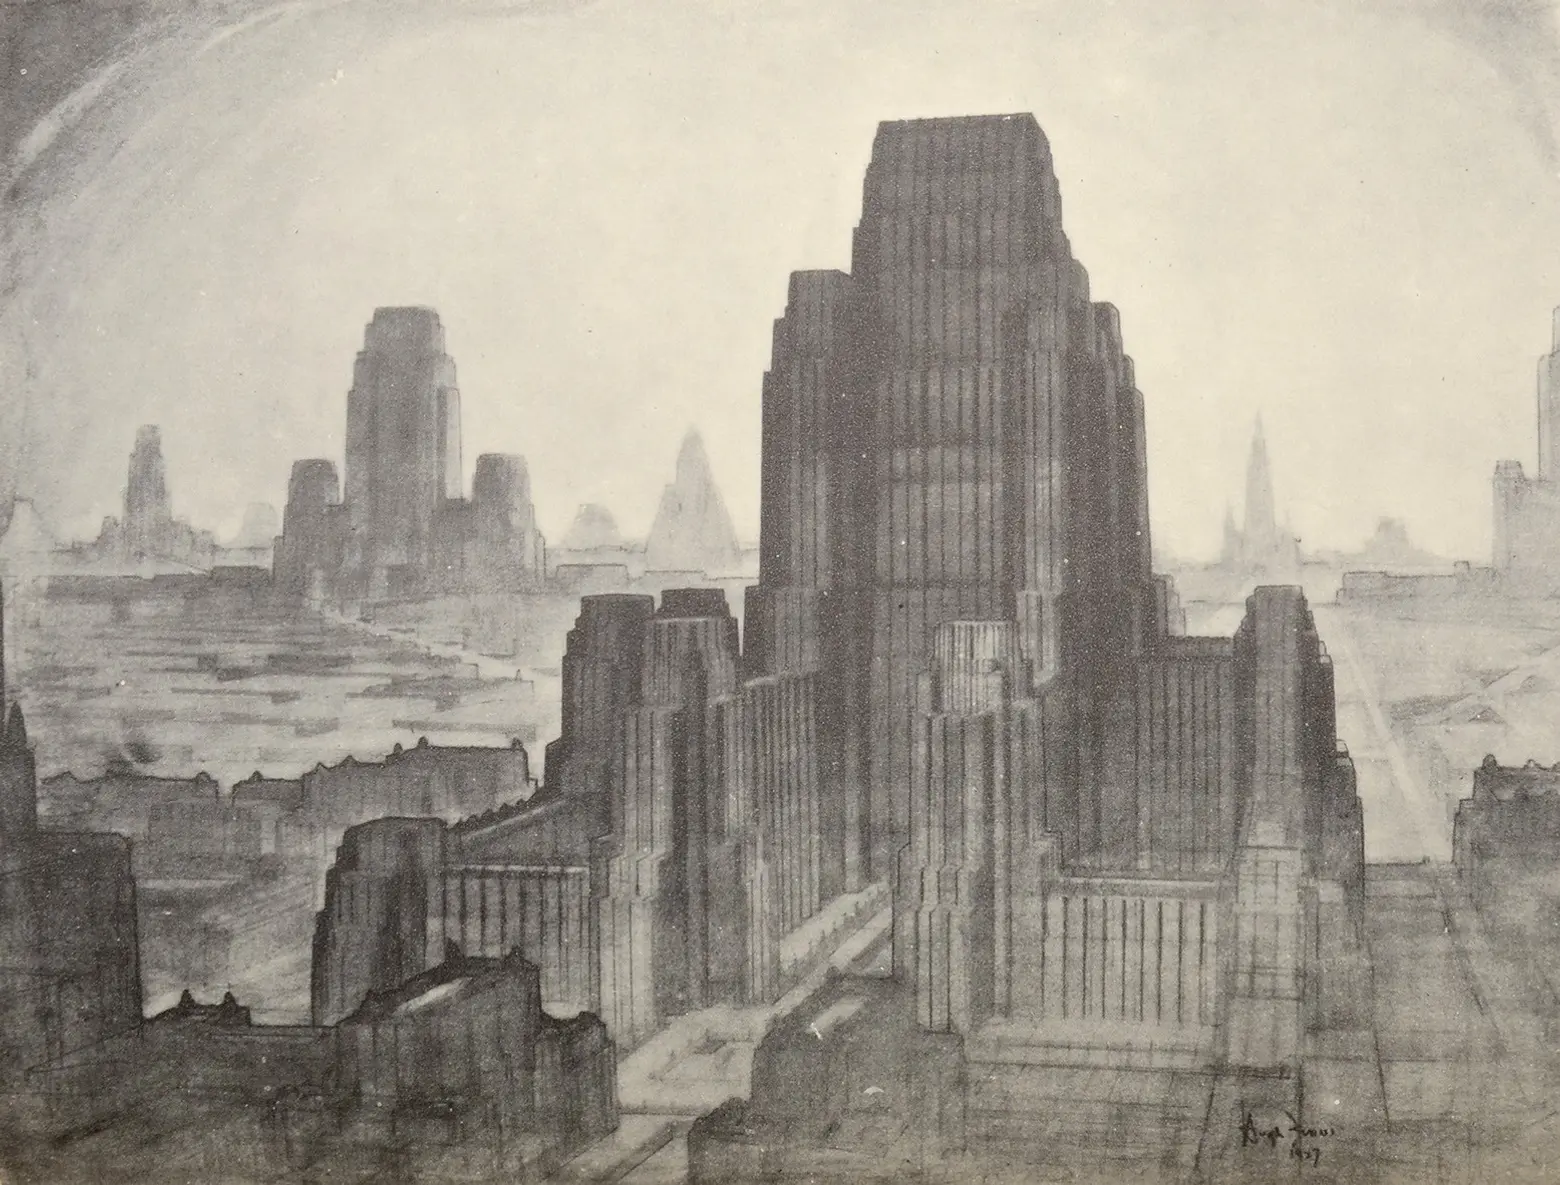 "The Metropolis of Tomorrow" drawn by Hugh Ferris